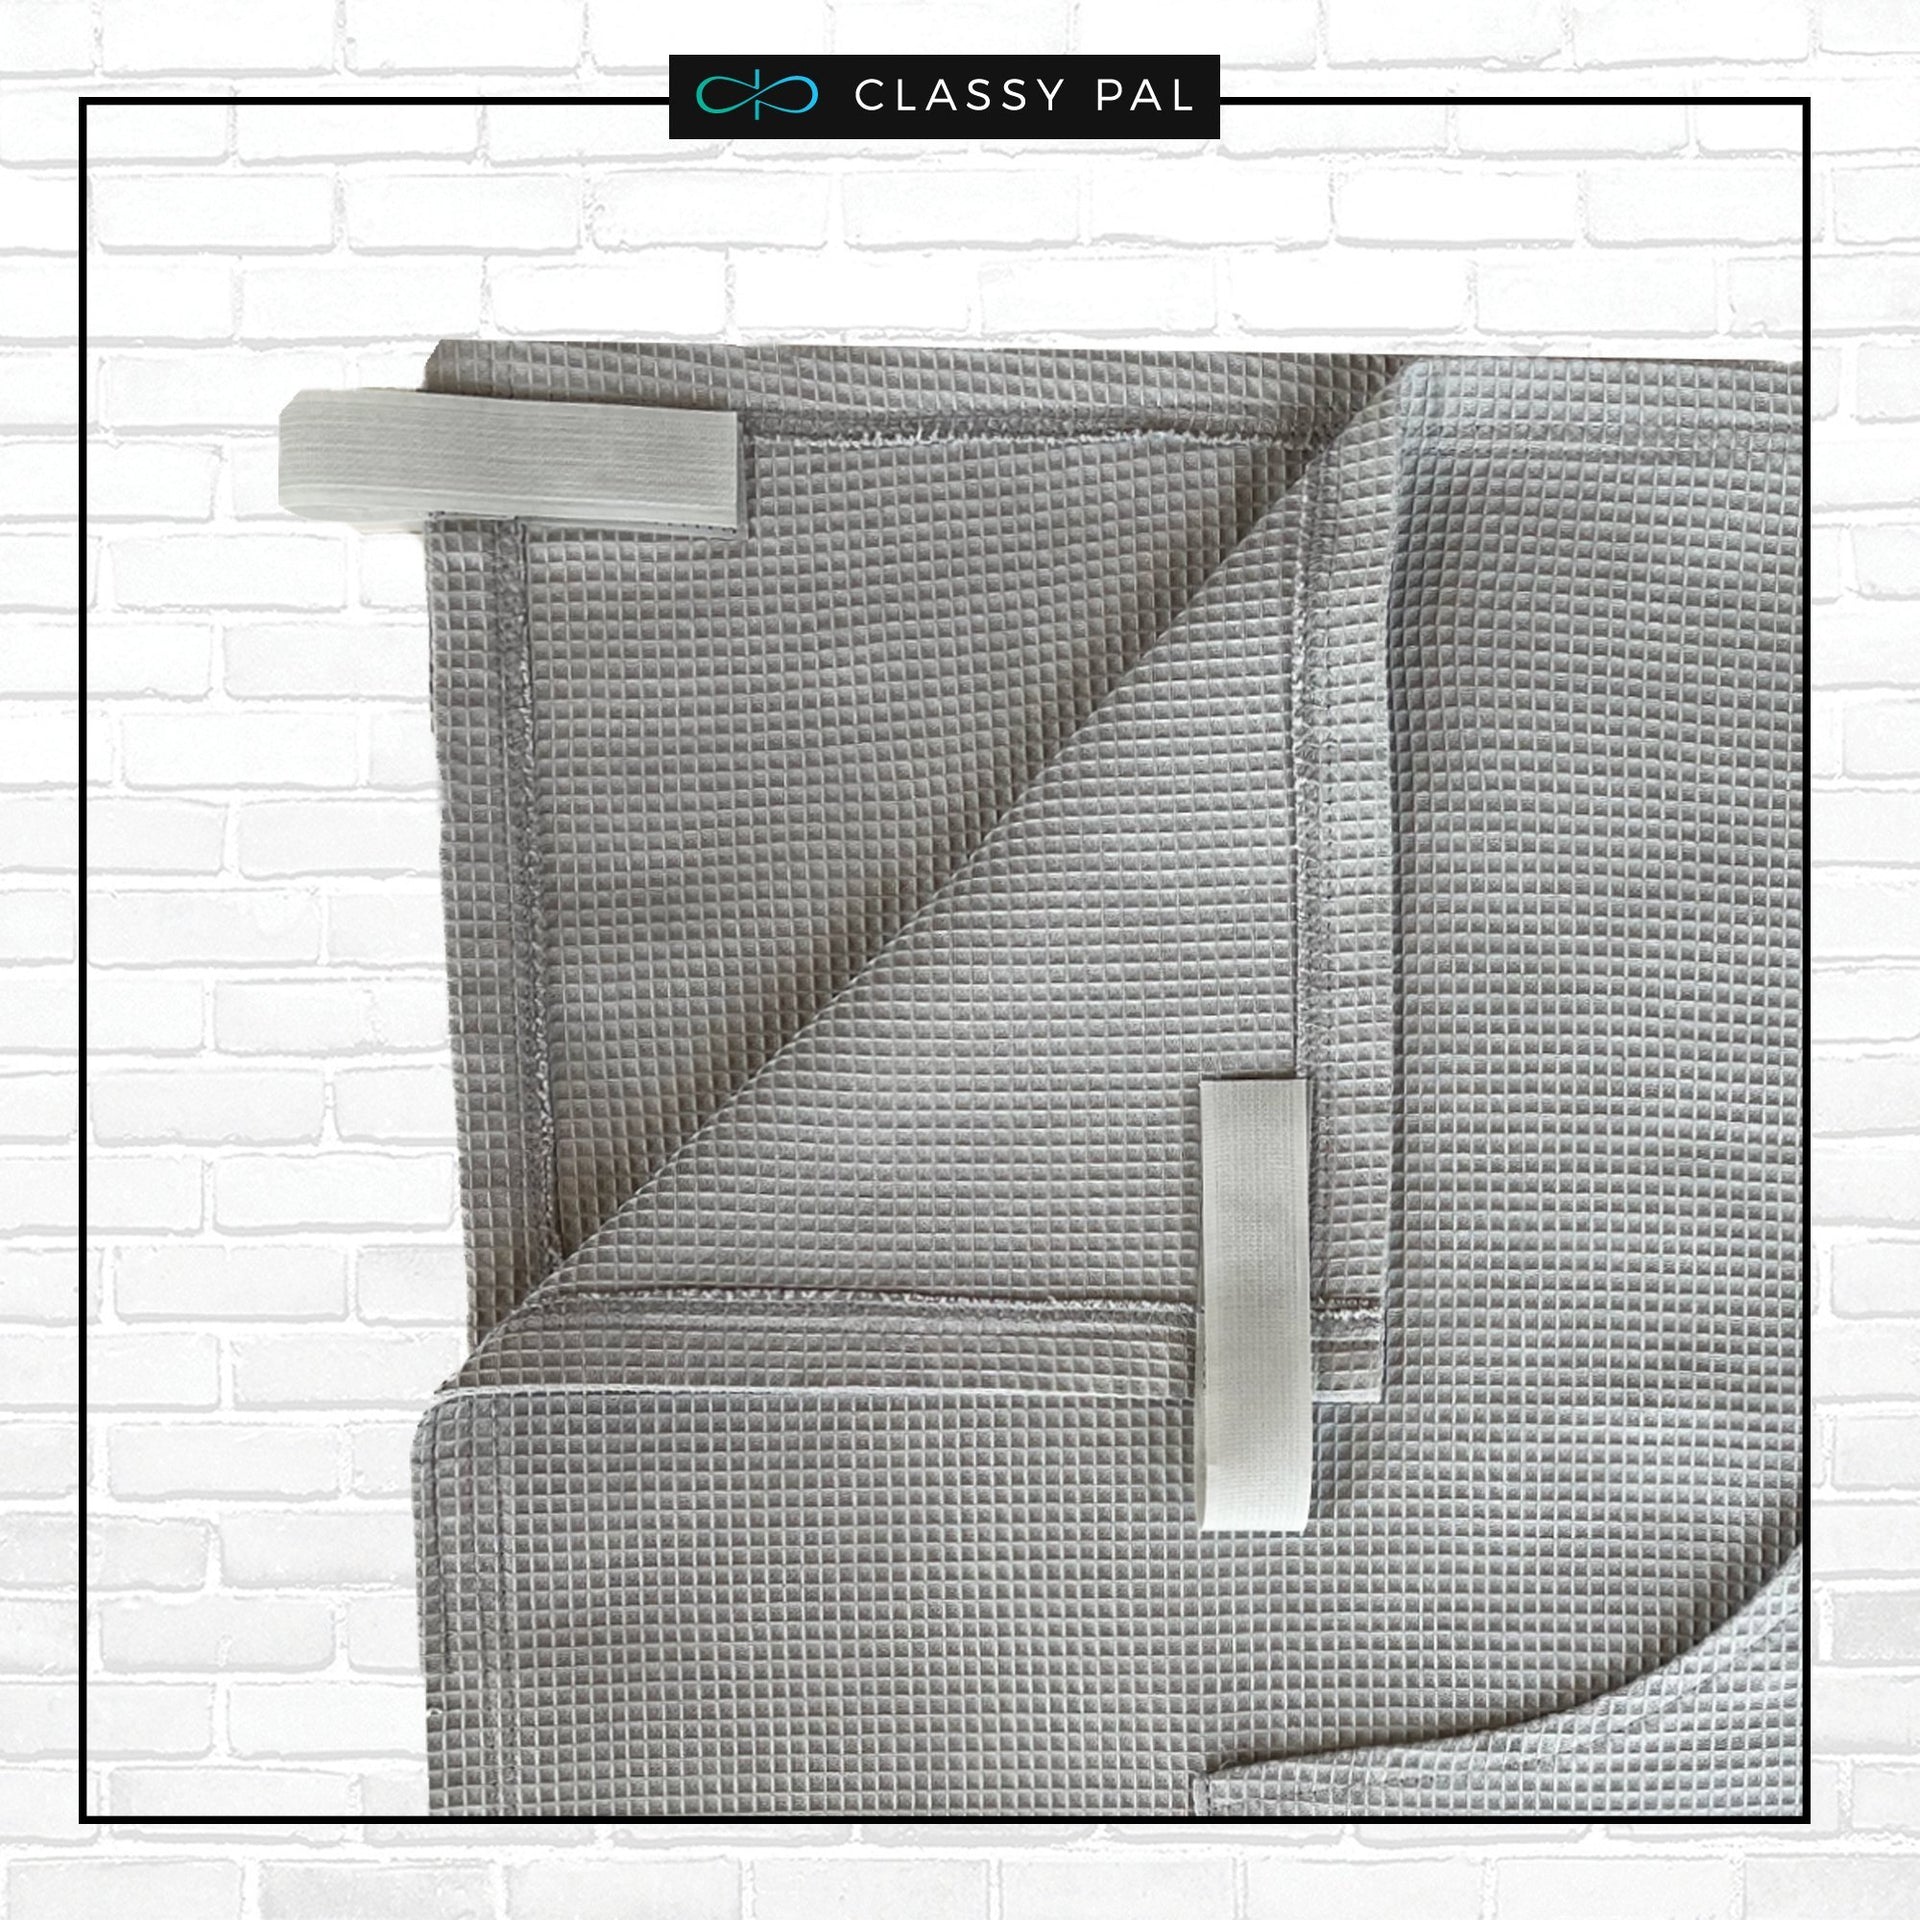 Grey Lightweight Wheelchair Blanket with Pocket - Classy Pal